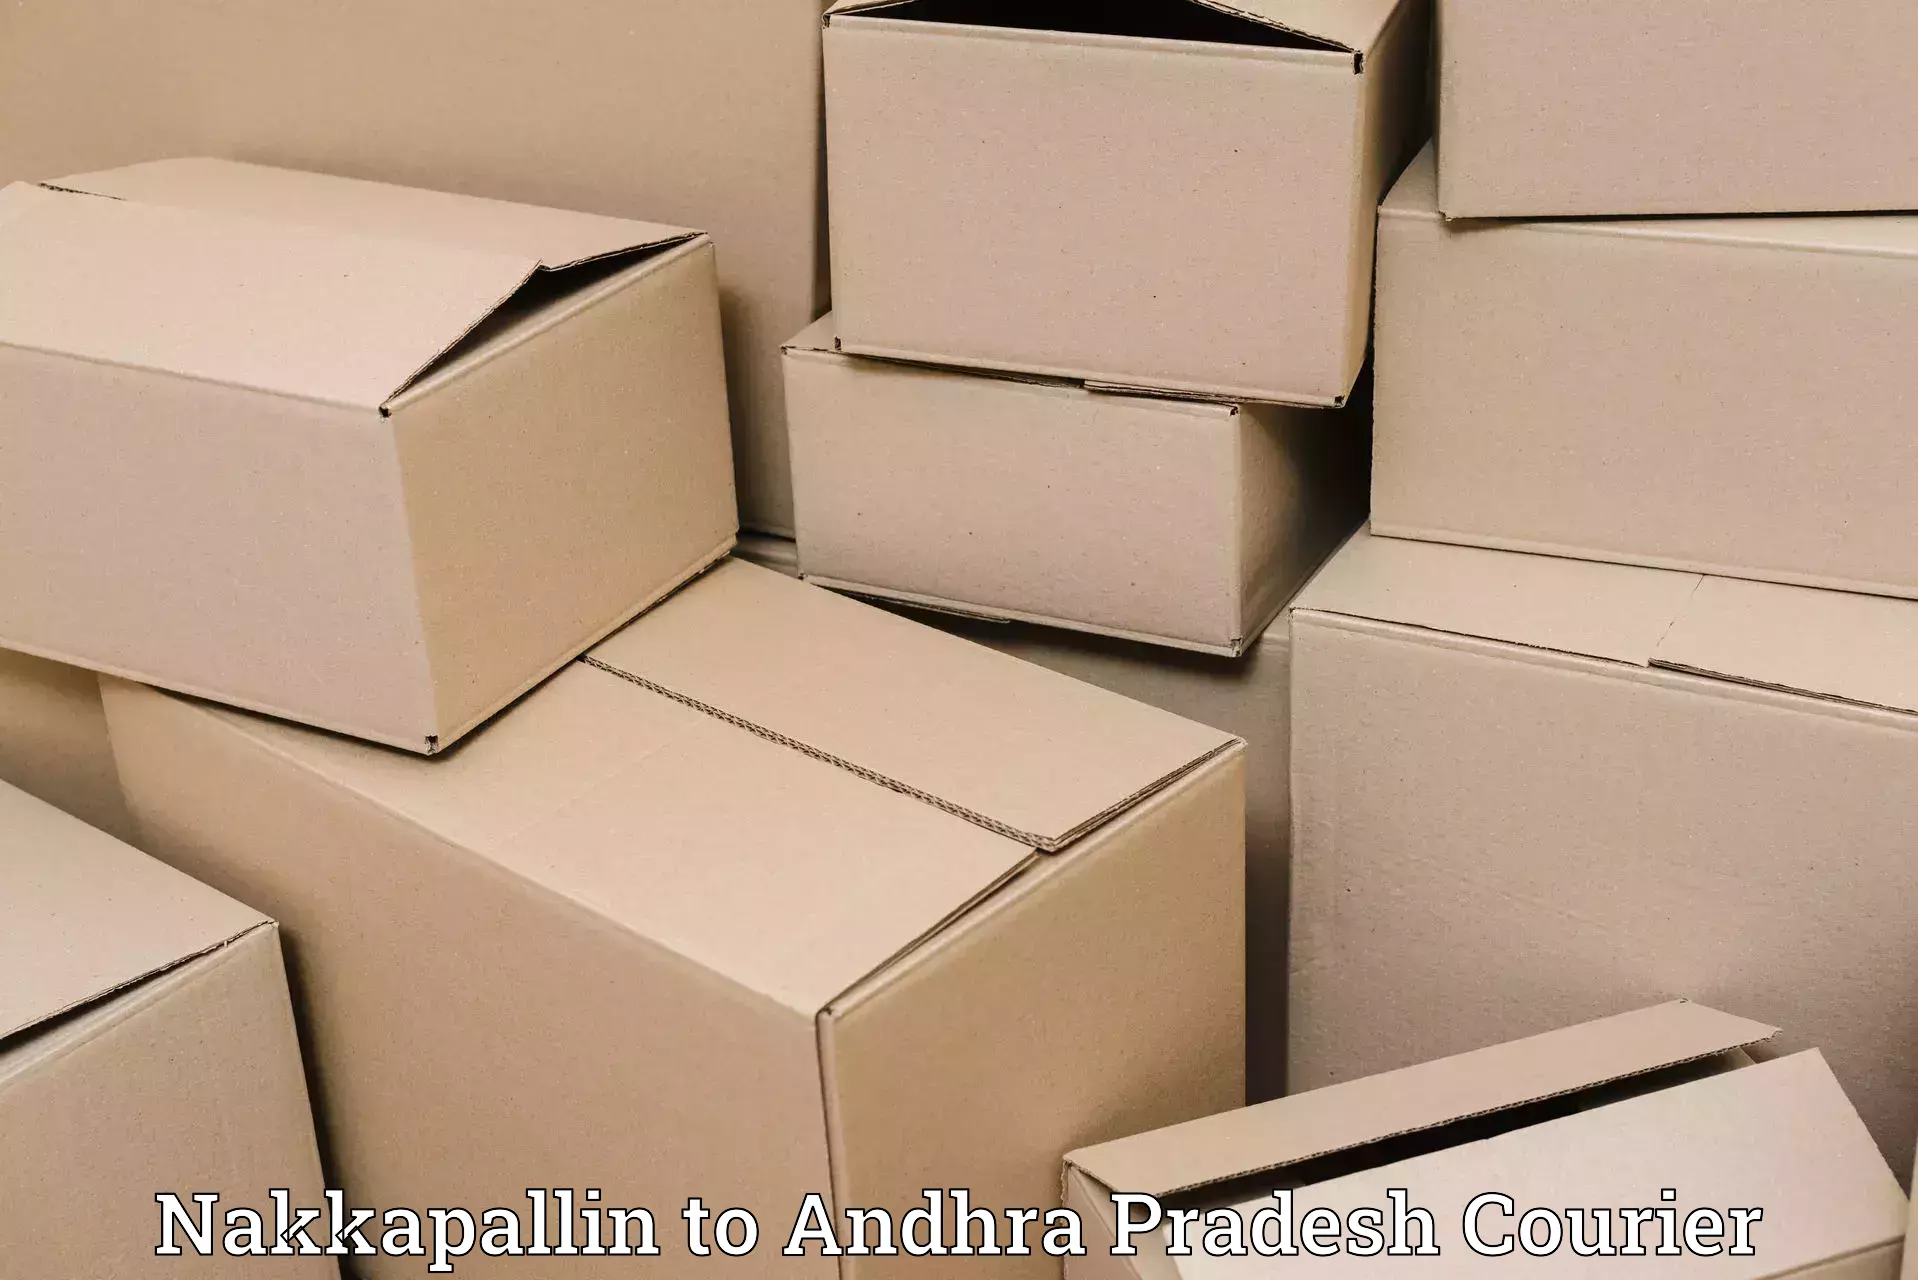 Logistics service provider Nakkapallin to Andhra Pradesh